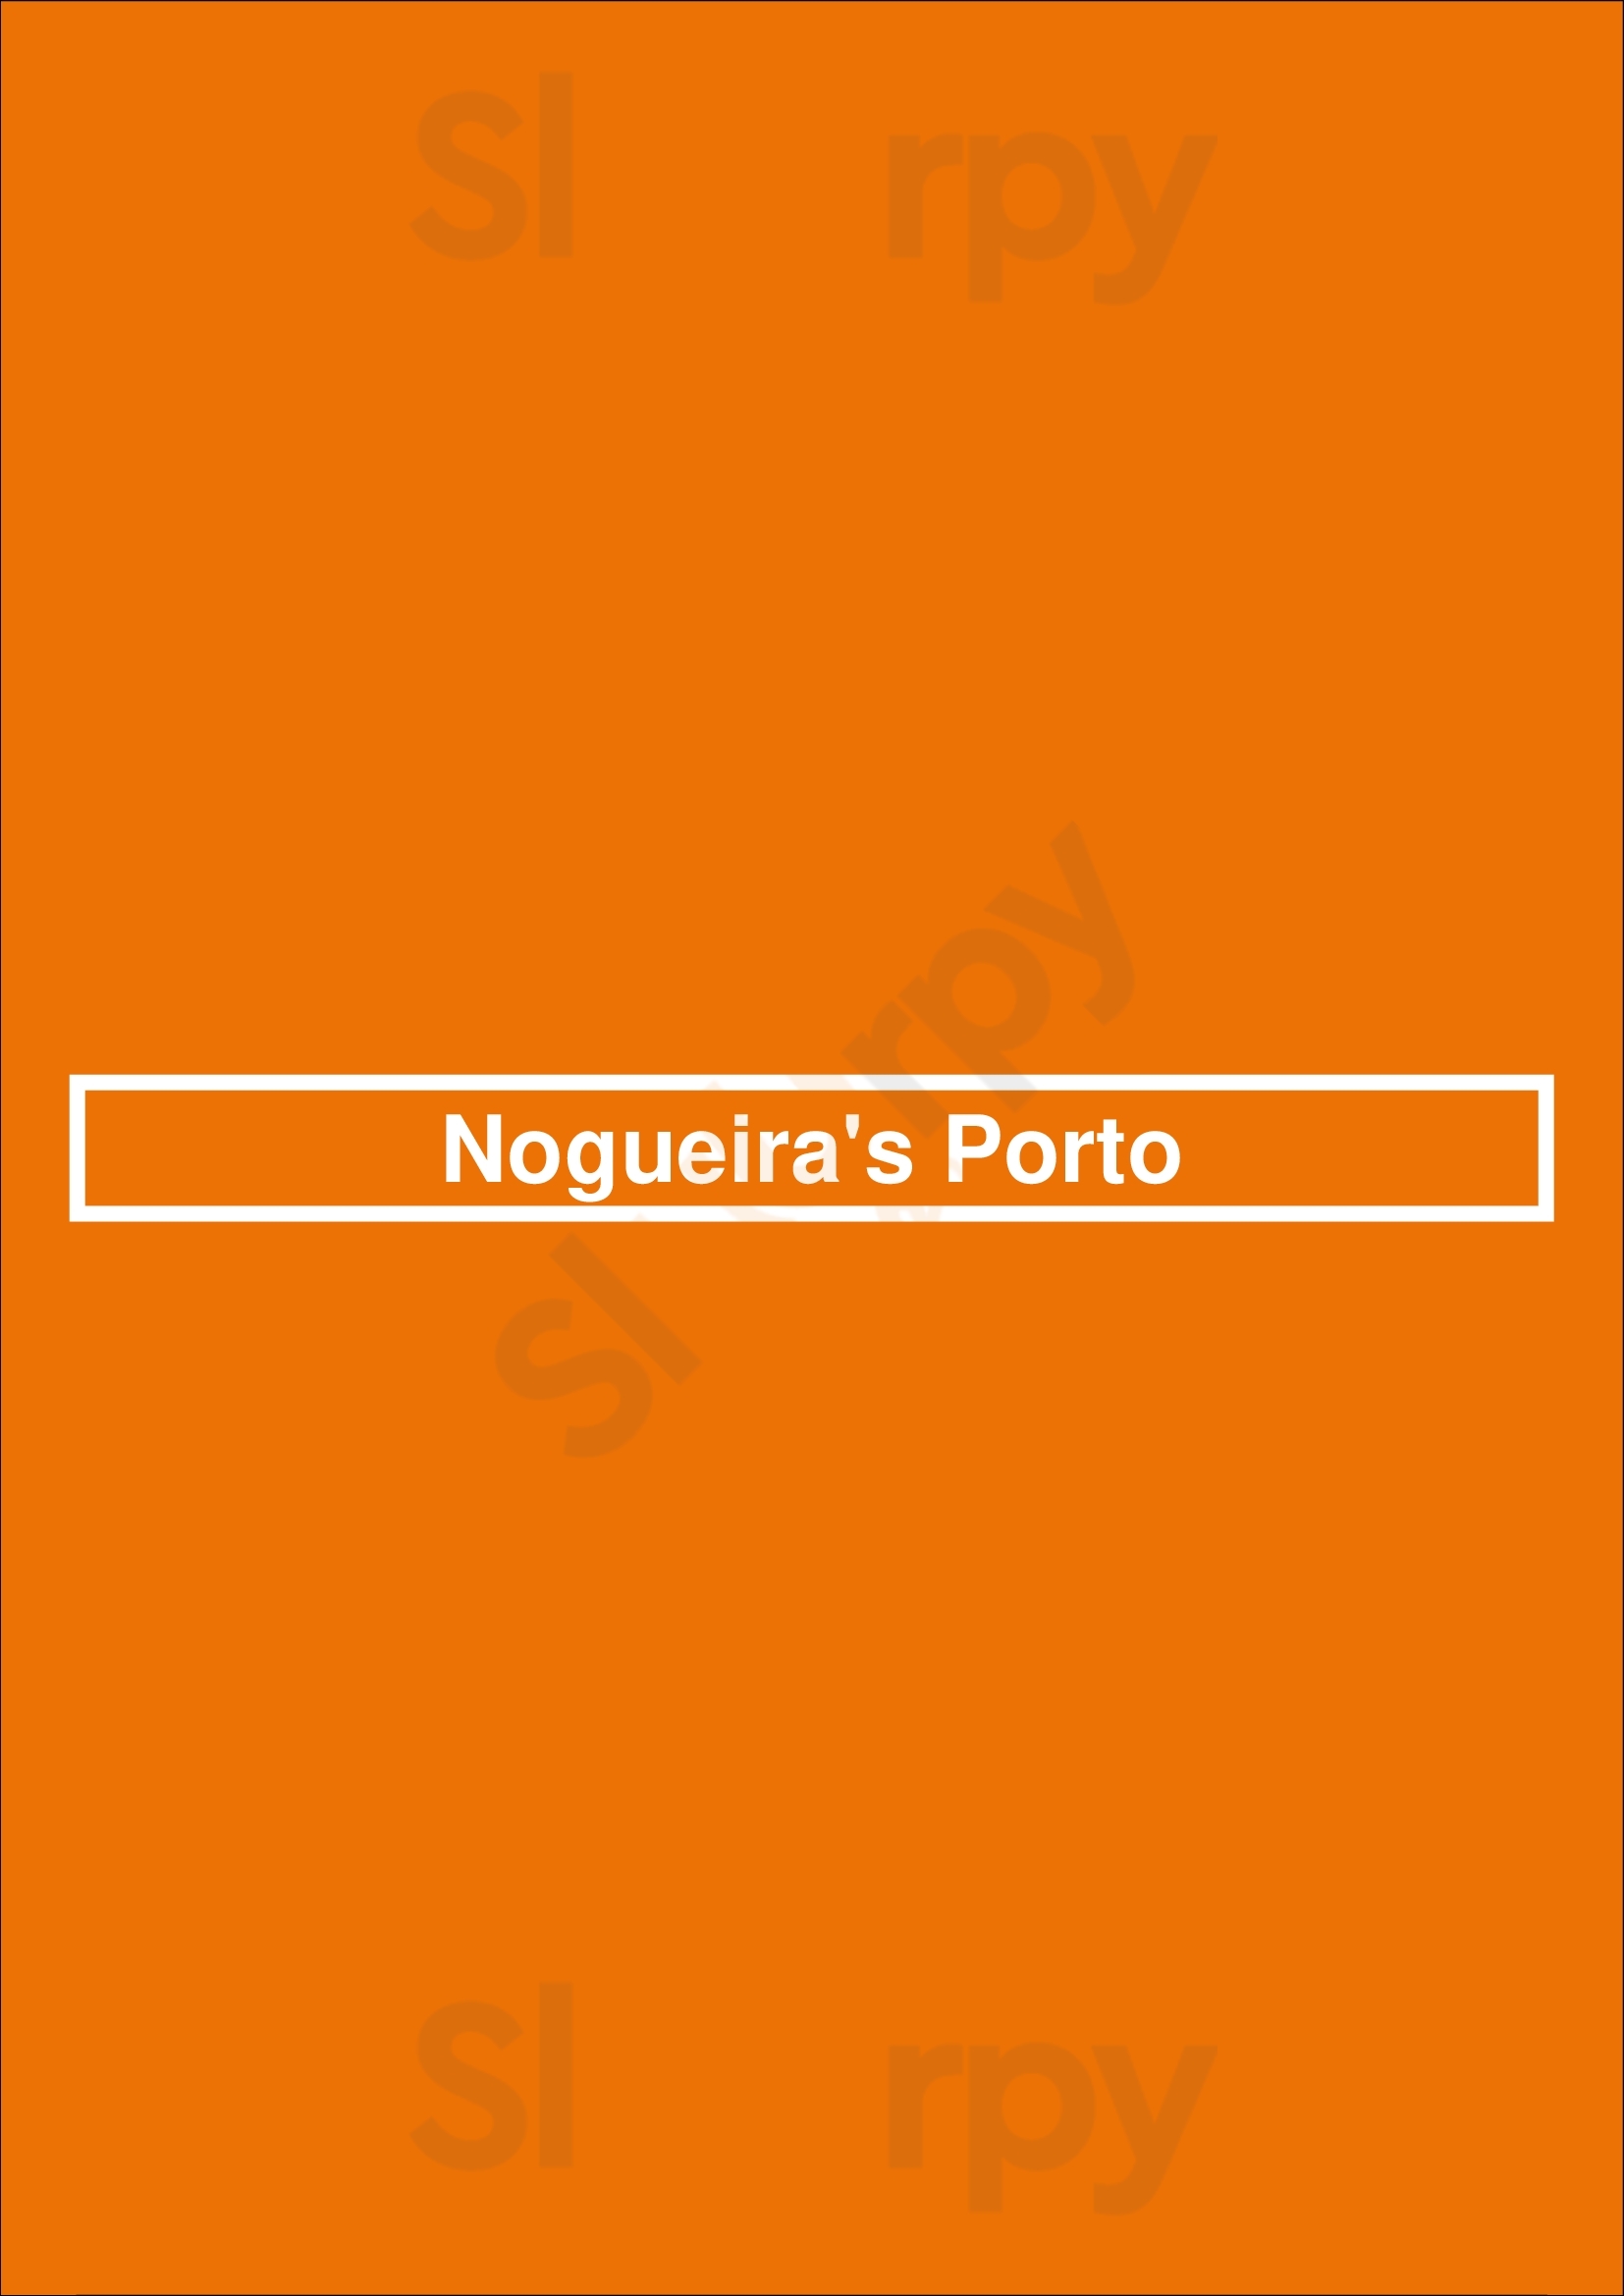 Nogueira's Porto Porto Menu - 1